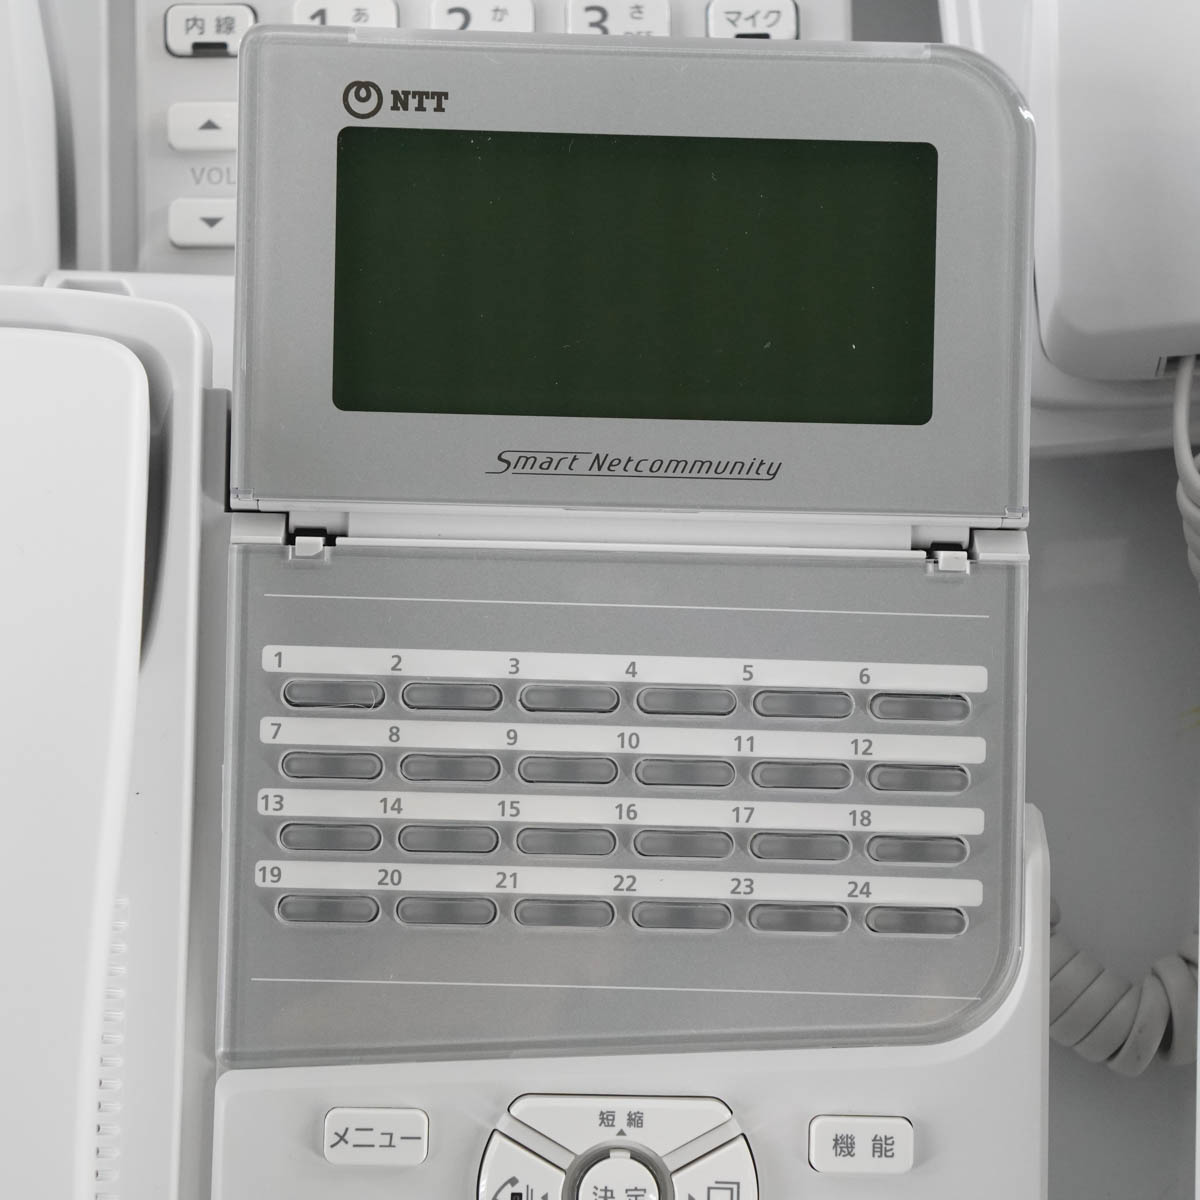 [PG]USED 8日保証 セット 20年製 NTT αZX ZXM-ME-(1) 主装置 電話機 スマートネットコミュニティ ビジネスフォン  ZX-(24)S[05049-0014]-中古販売分析機器計測器総合商社ディルウィングス